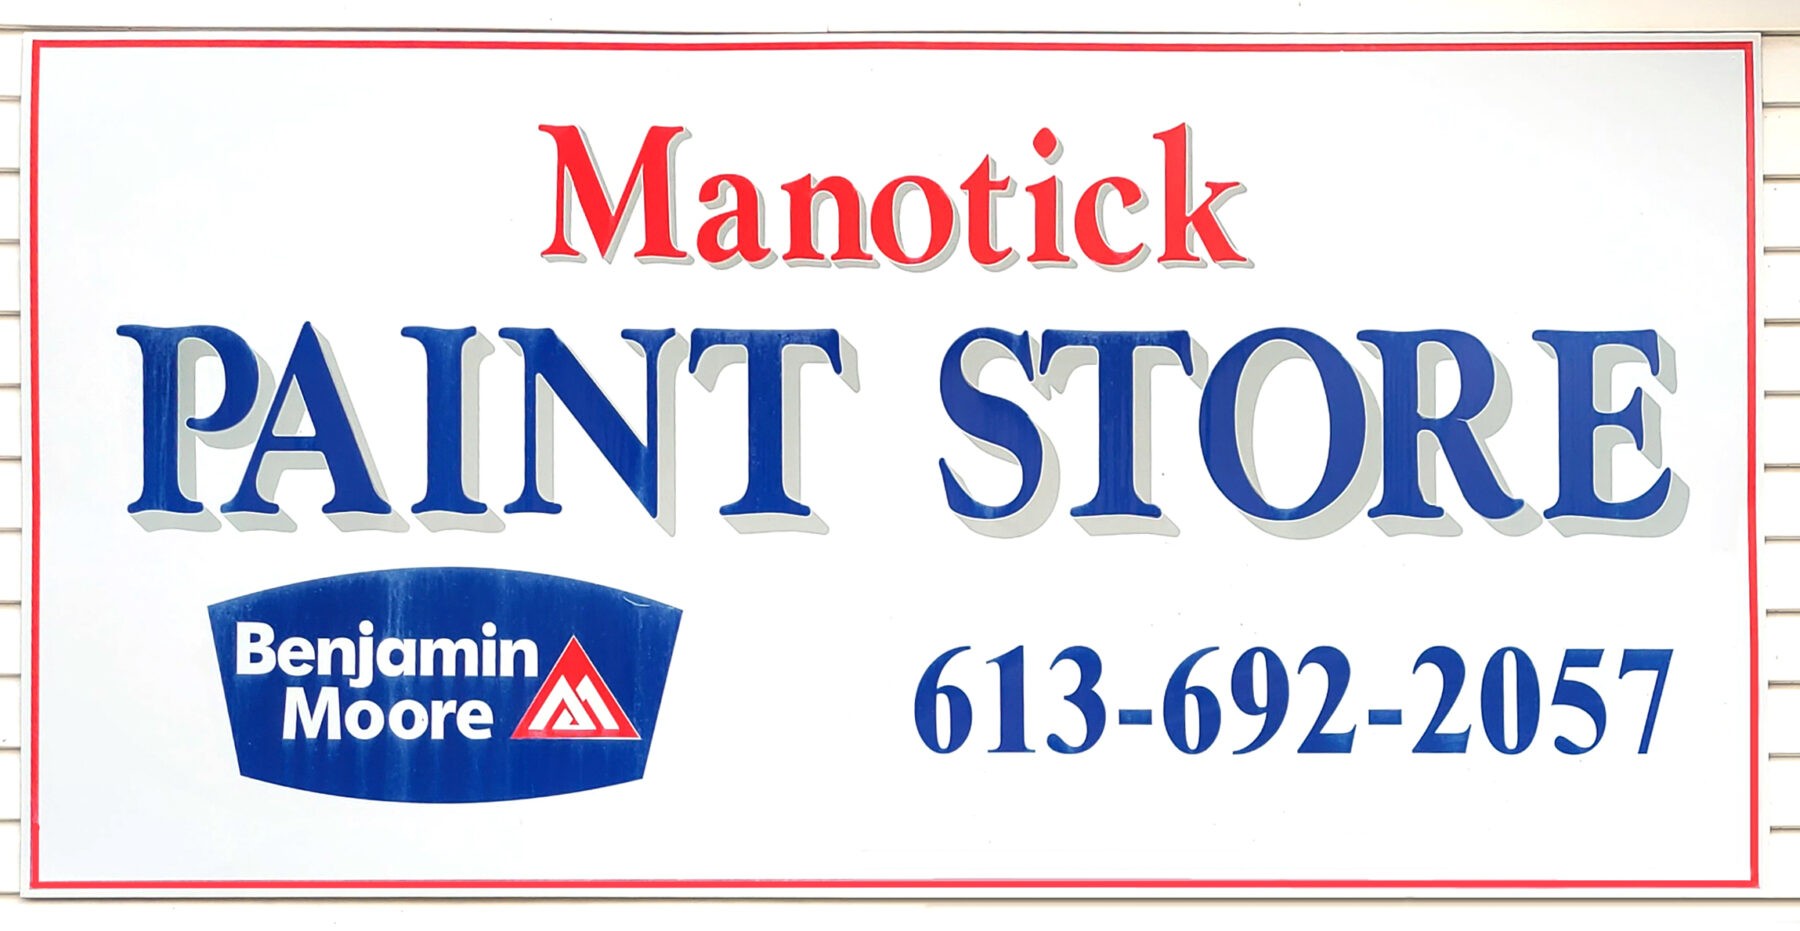 Manotick Paint Store logo